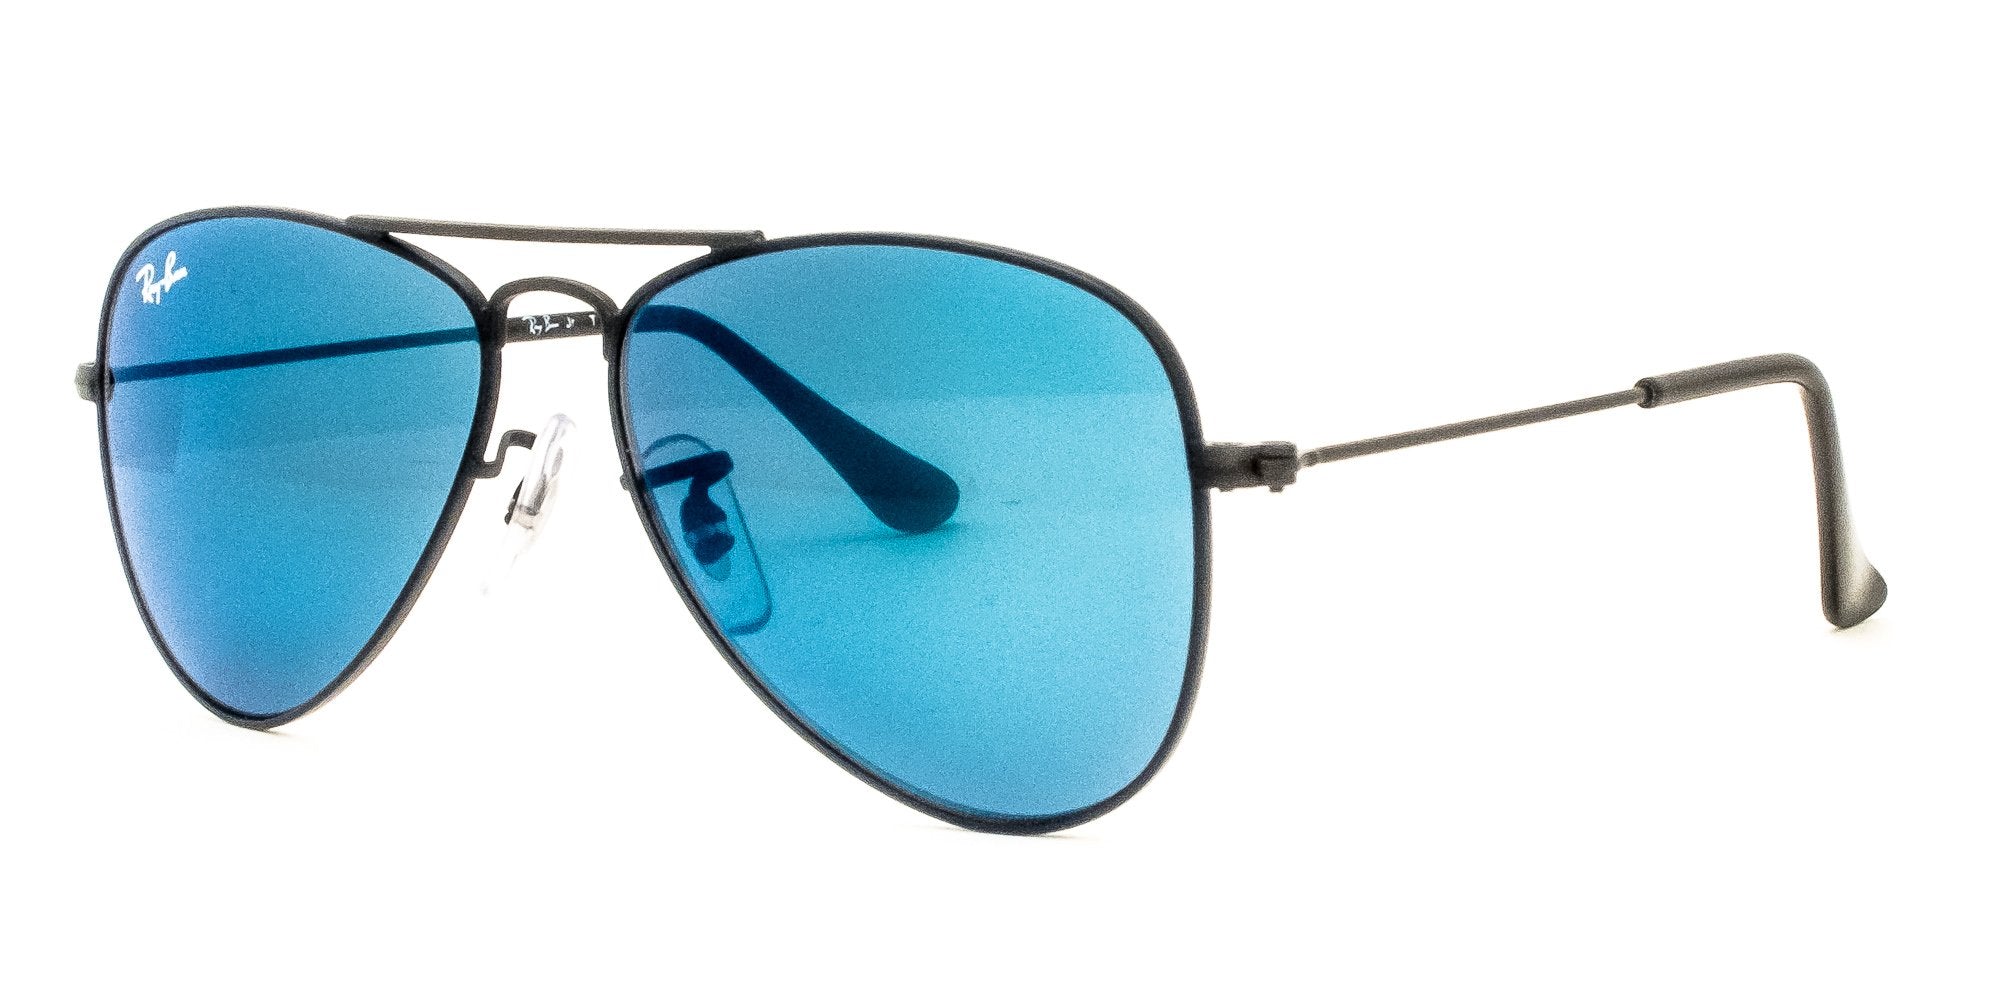 RAY BAN kids sunglasses RJ 9506S MATTE BLACK/BLUE MIRROR 201/55 JR 9506 |  eBay